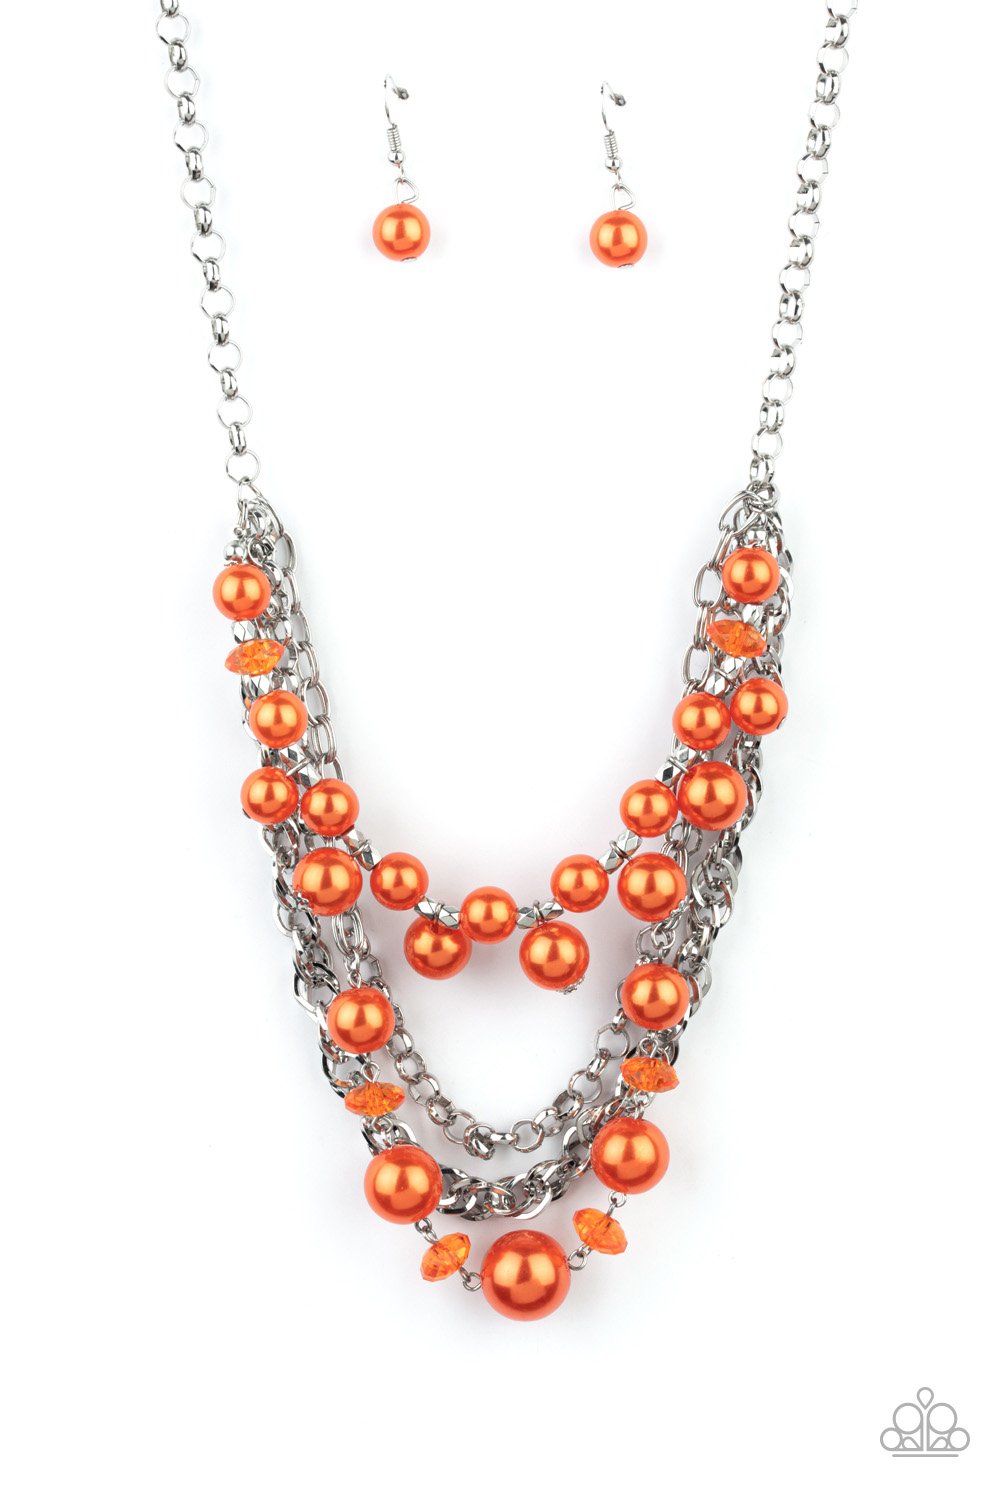 Rockin' Rockette - Orange Necklace freeshipping - JewLz4u Gemstone Gallery